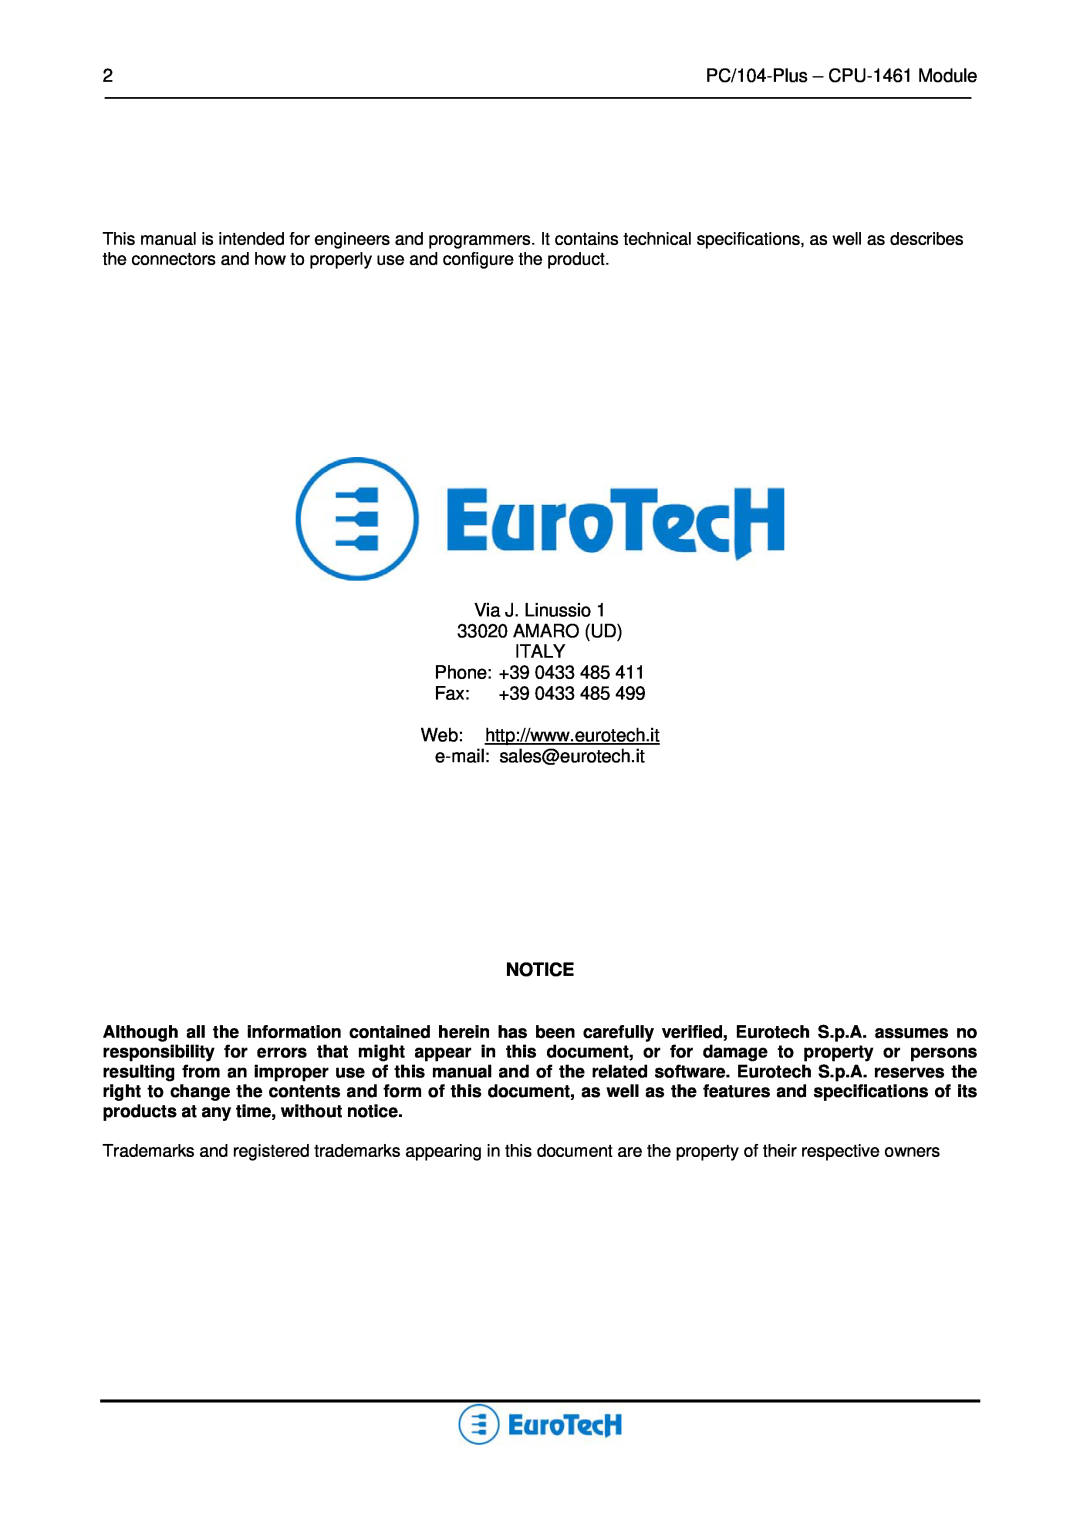 Eurotech Appliances user manual PC/104-Plus - CPU-1461 Module 